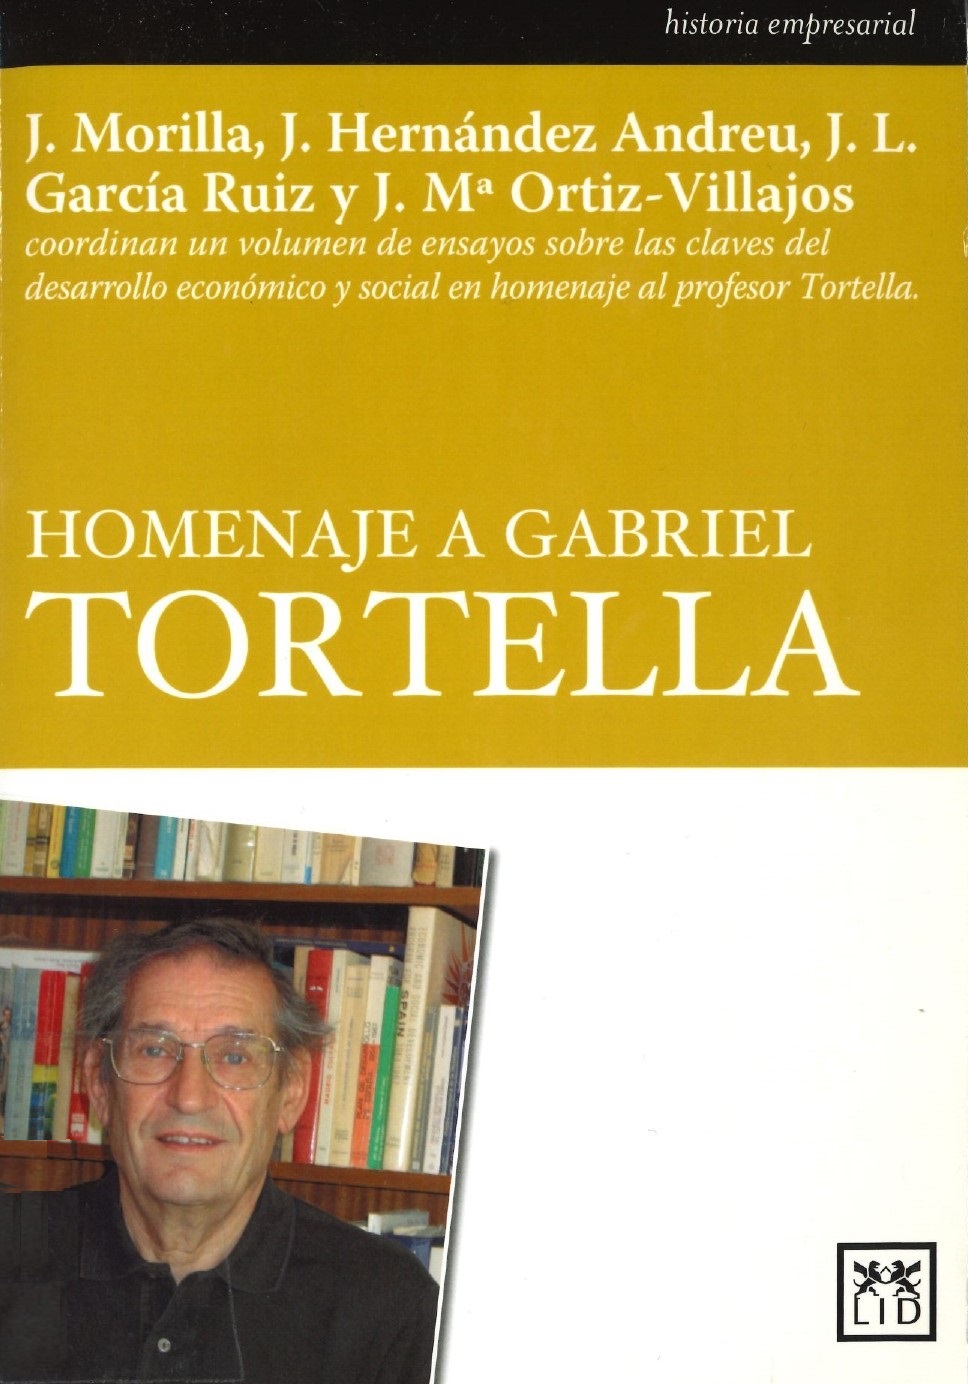 Imagen de portada del libro Homenaje a Gabriel Tortella